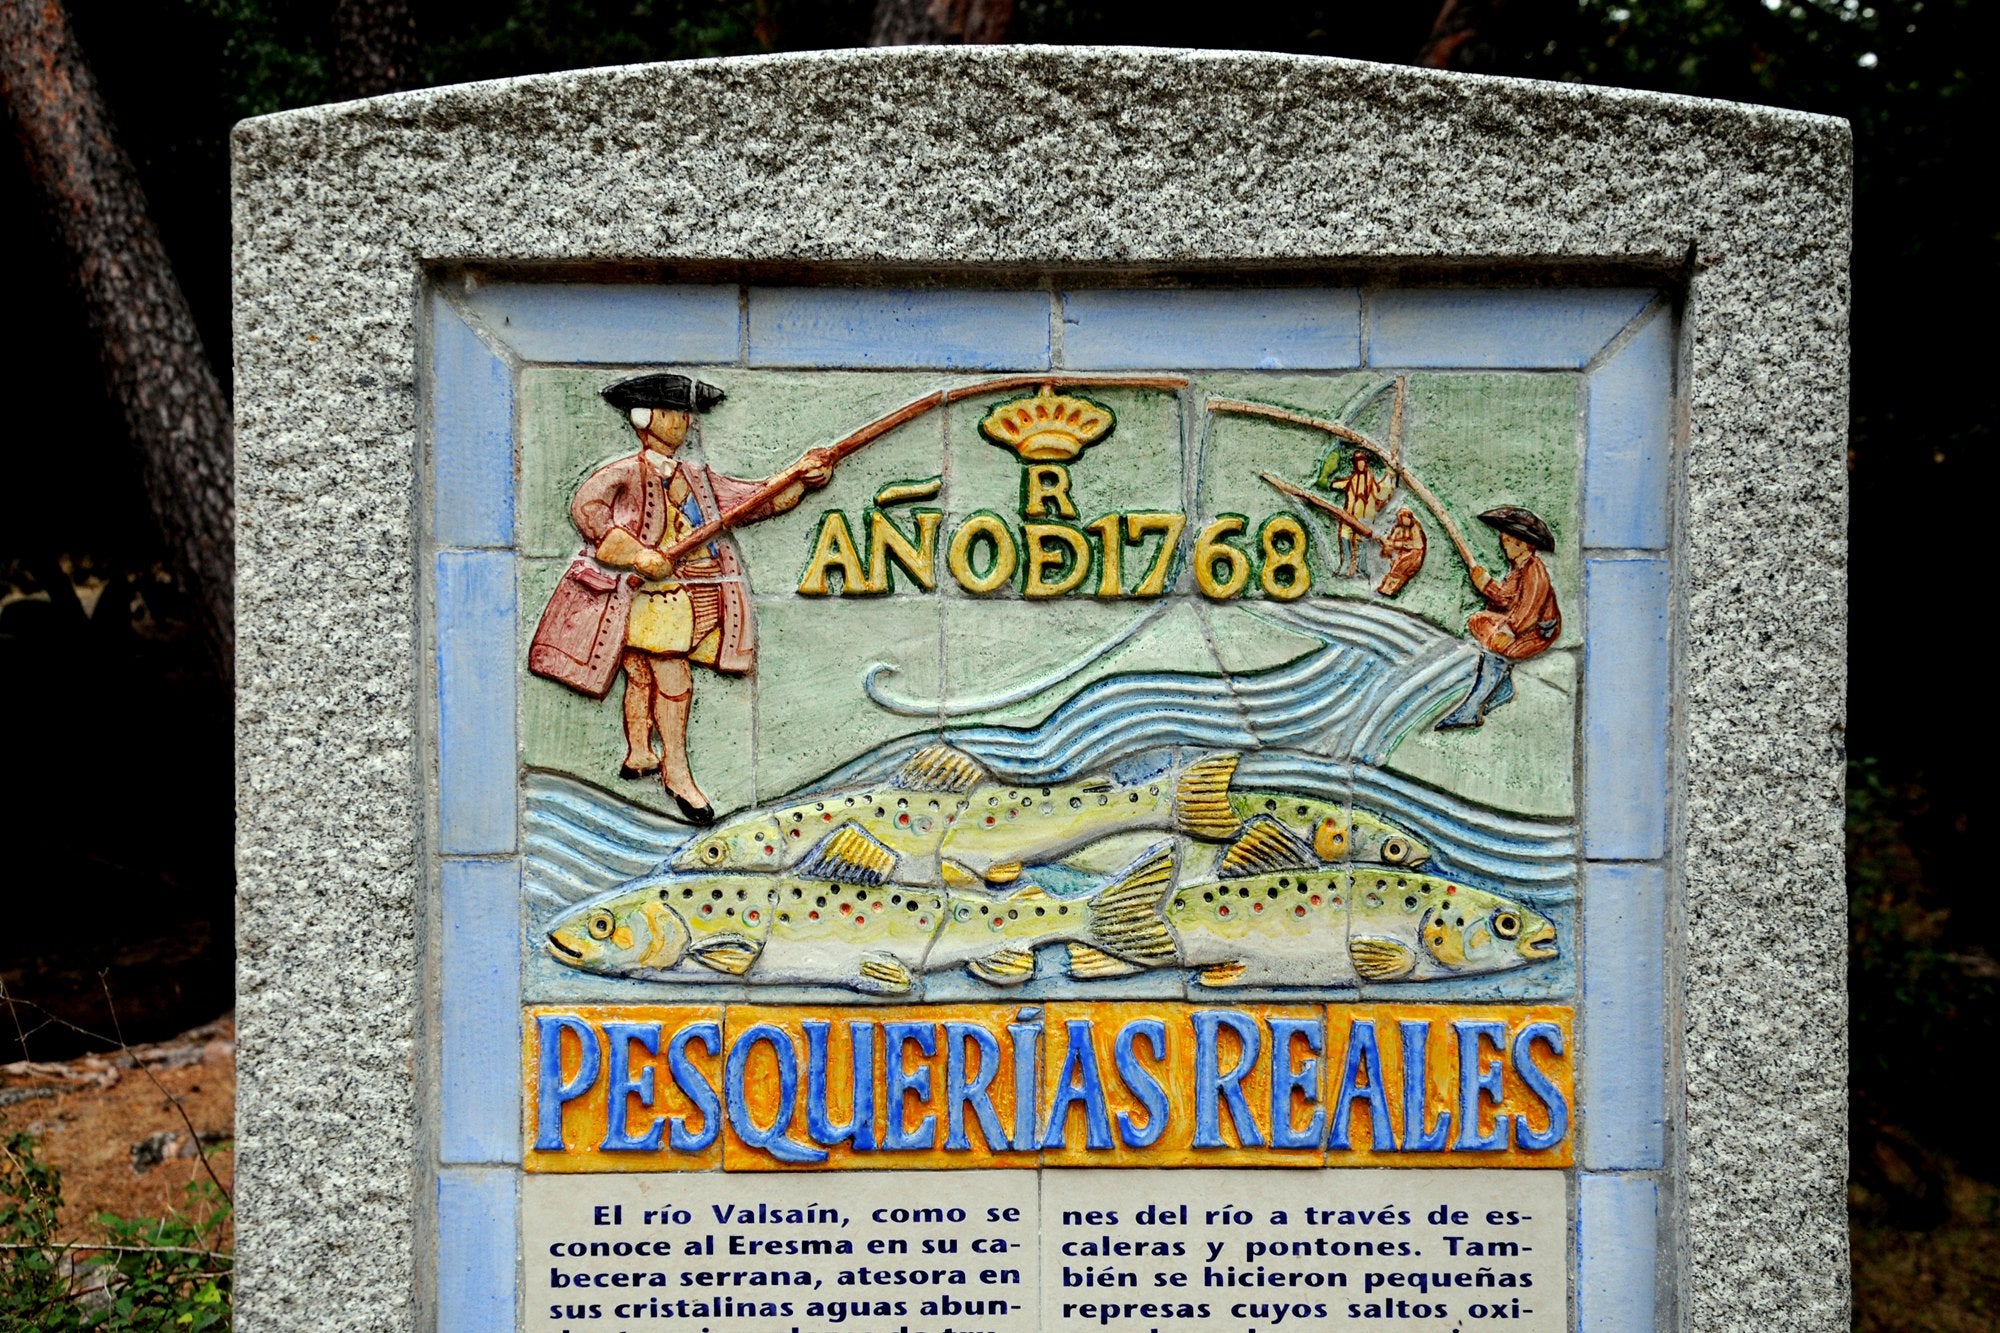 Camino de Santiago de Madrid Etapa 4 cartel pesquerías reales